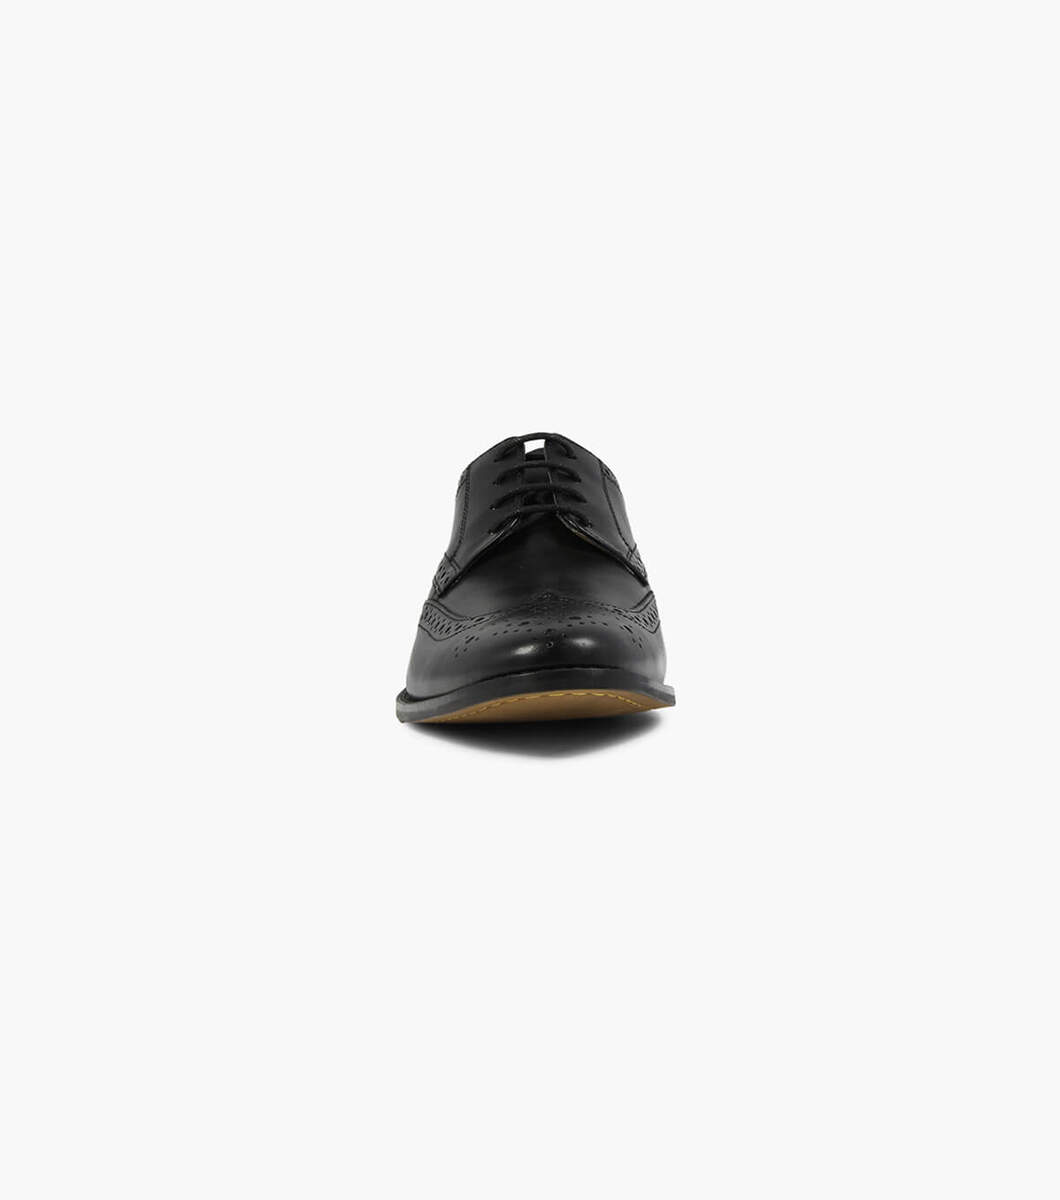 Florsheim MONTINARO WINGTIP 11737-001 Black Leather Oxford Lace Up Shoes